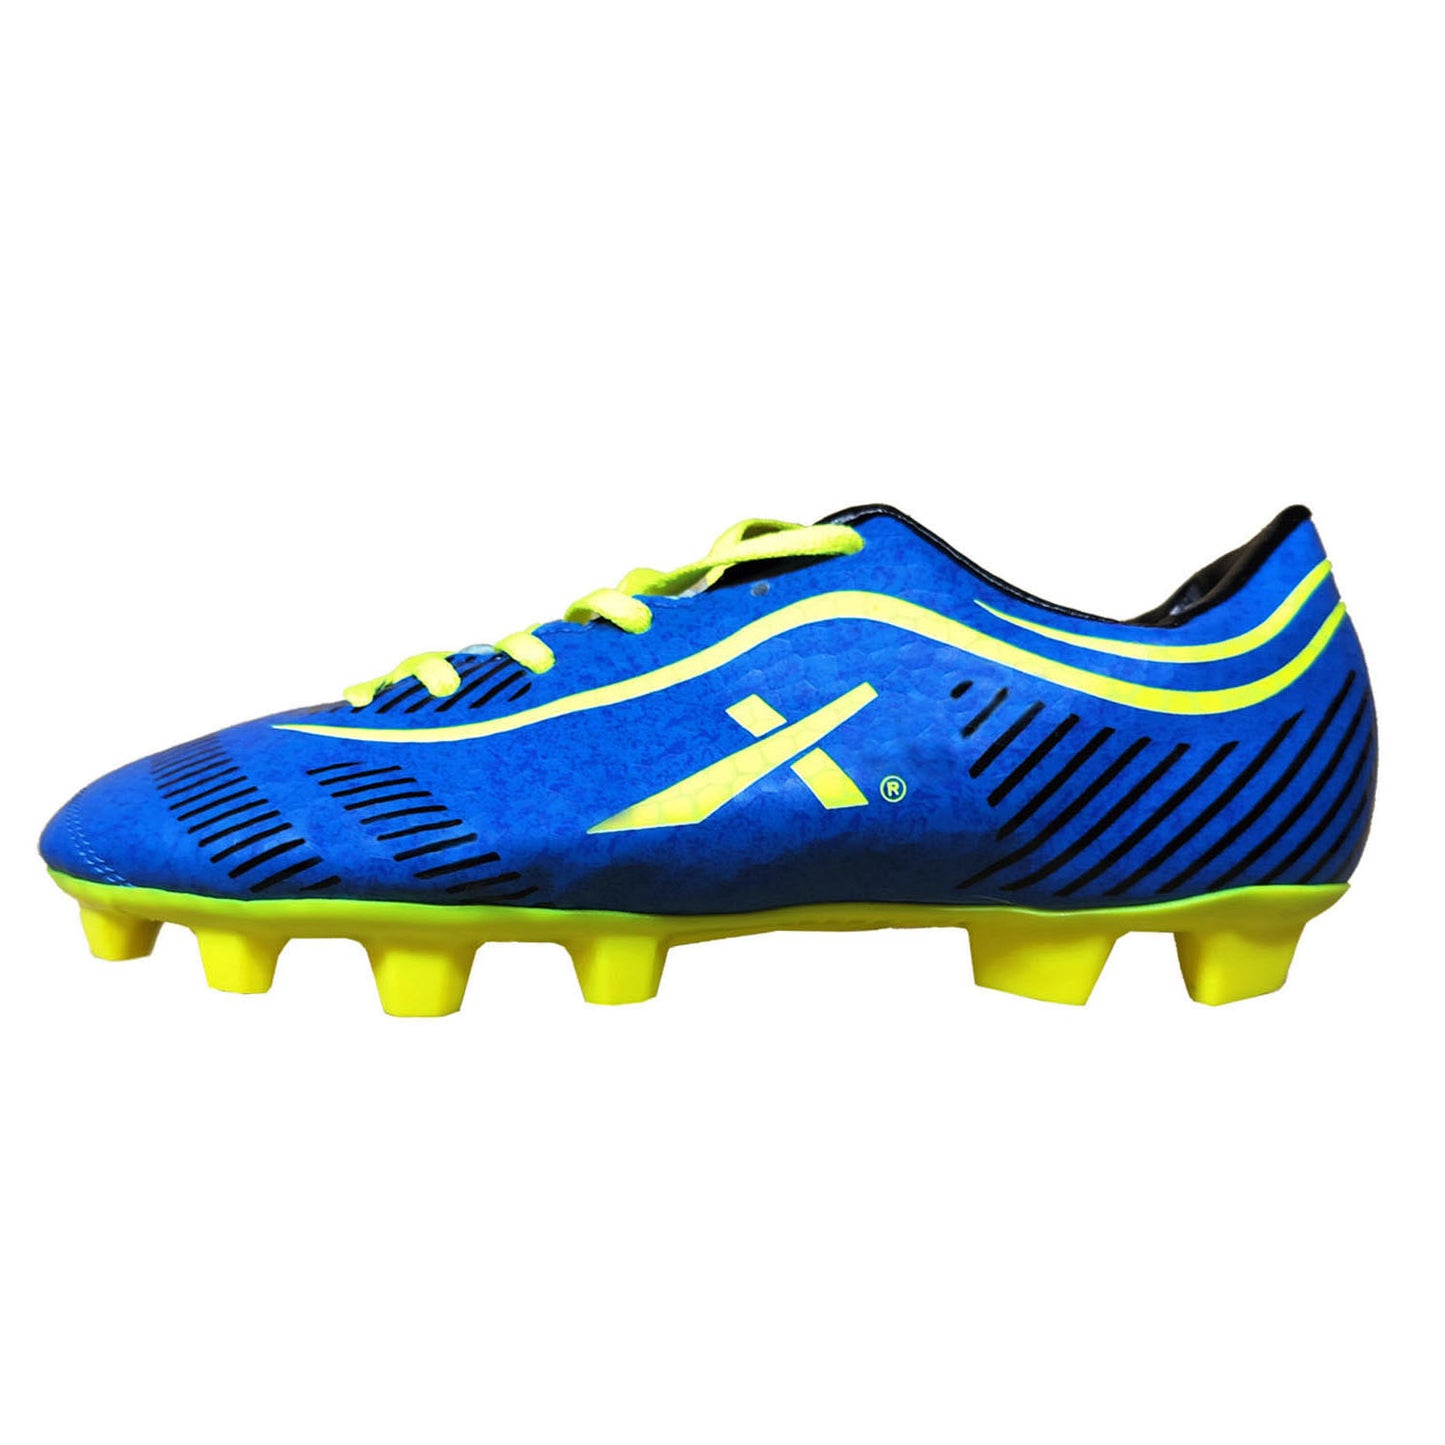 Vector X Electra Kid's Football Studs Sports Shoe, Blue/Blck/Green - Best Price online Prokicksports.com